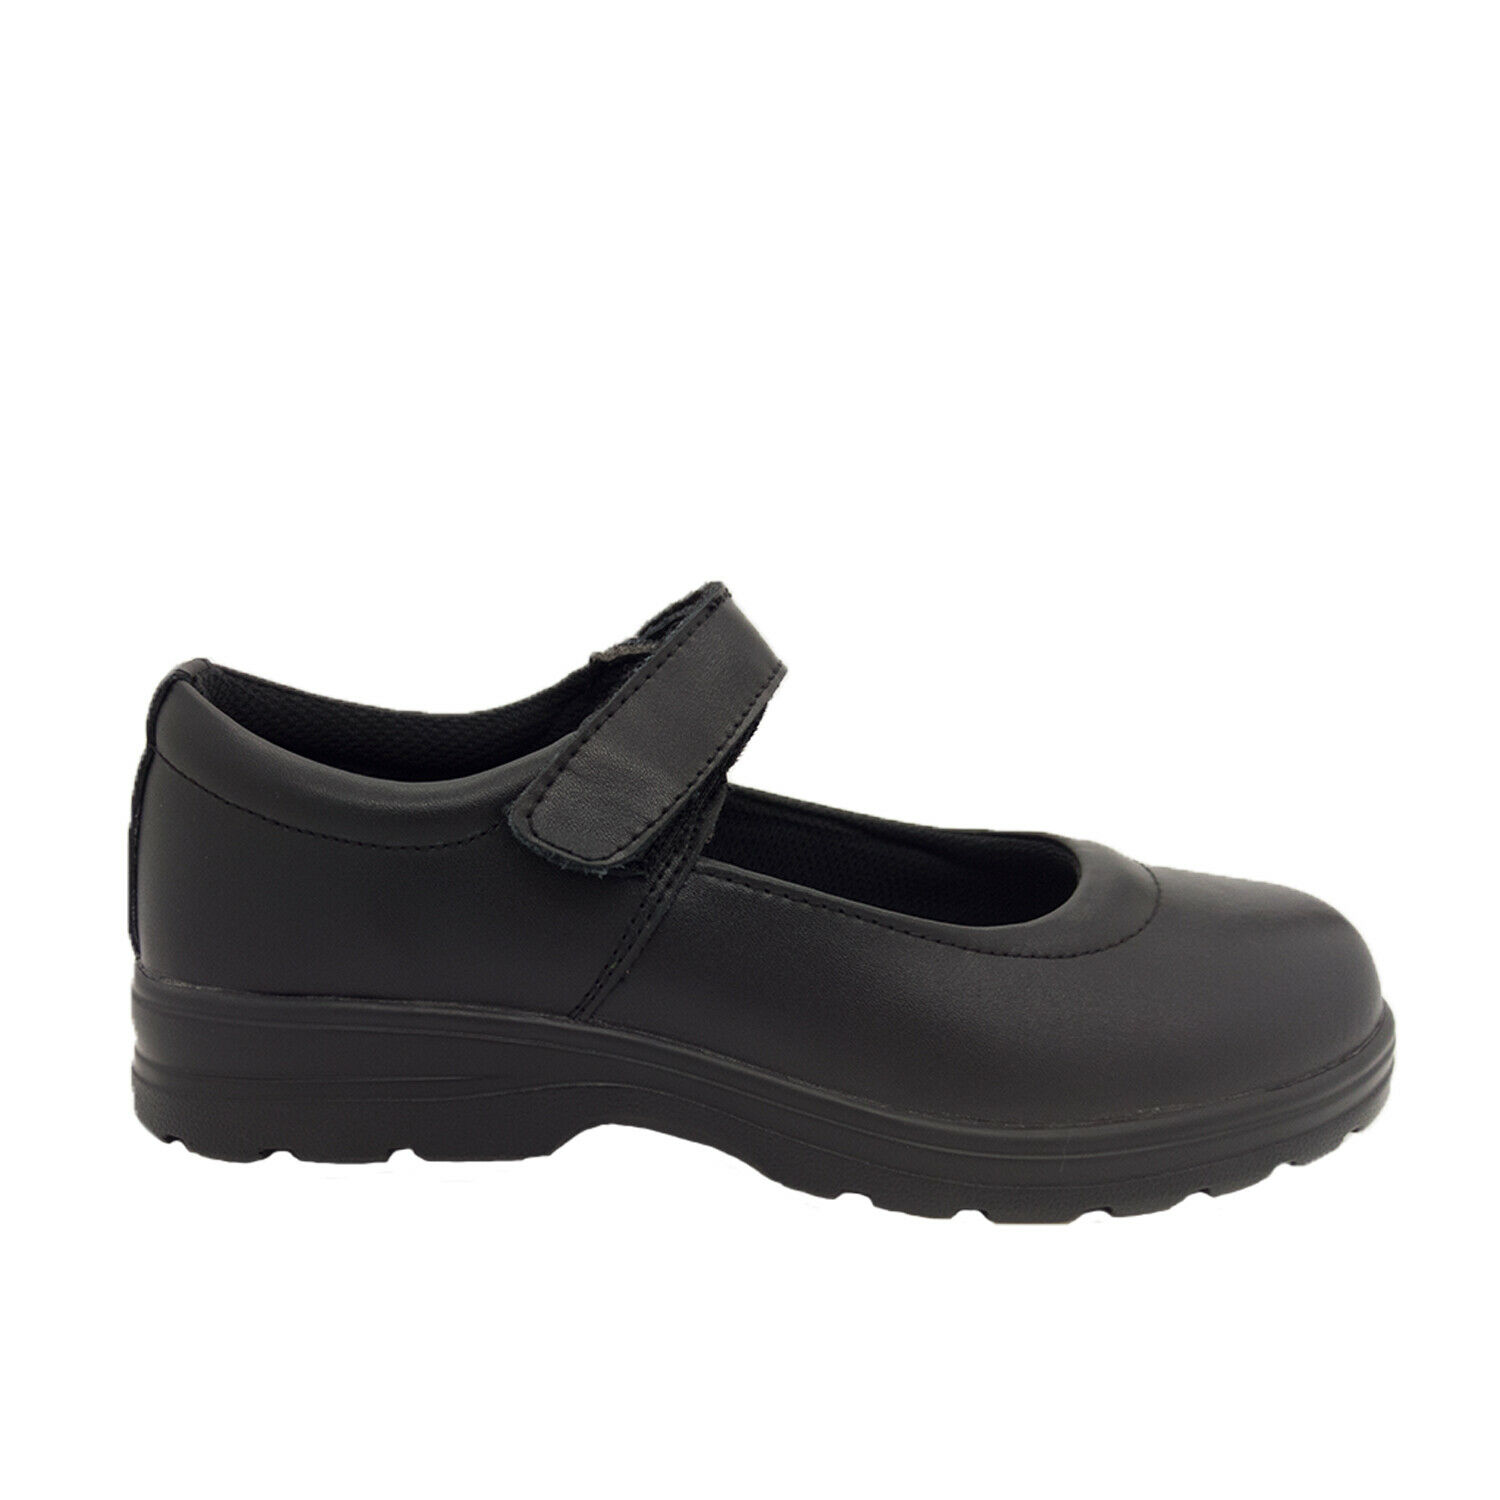 bata school shoes black leather